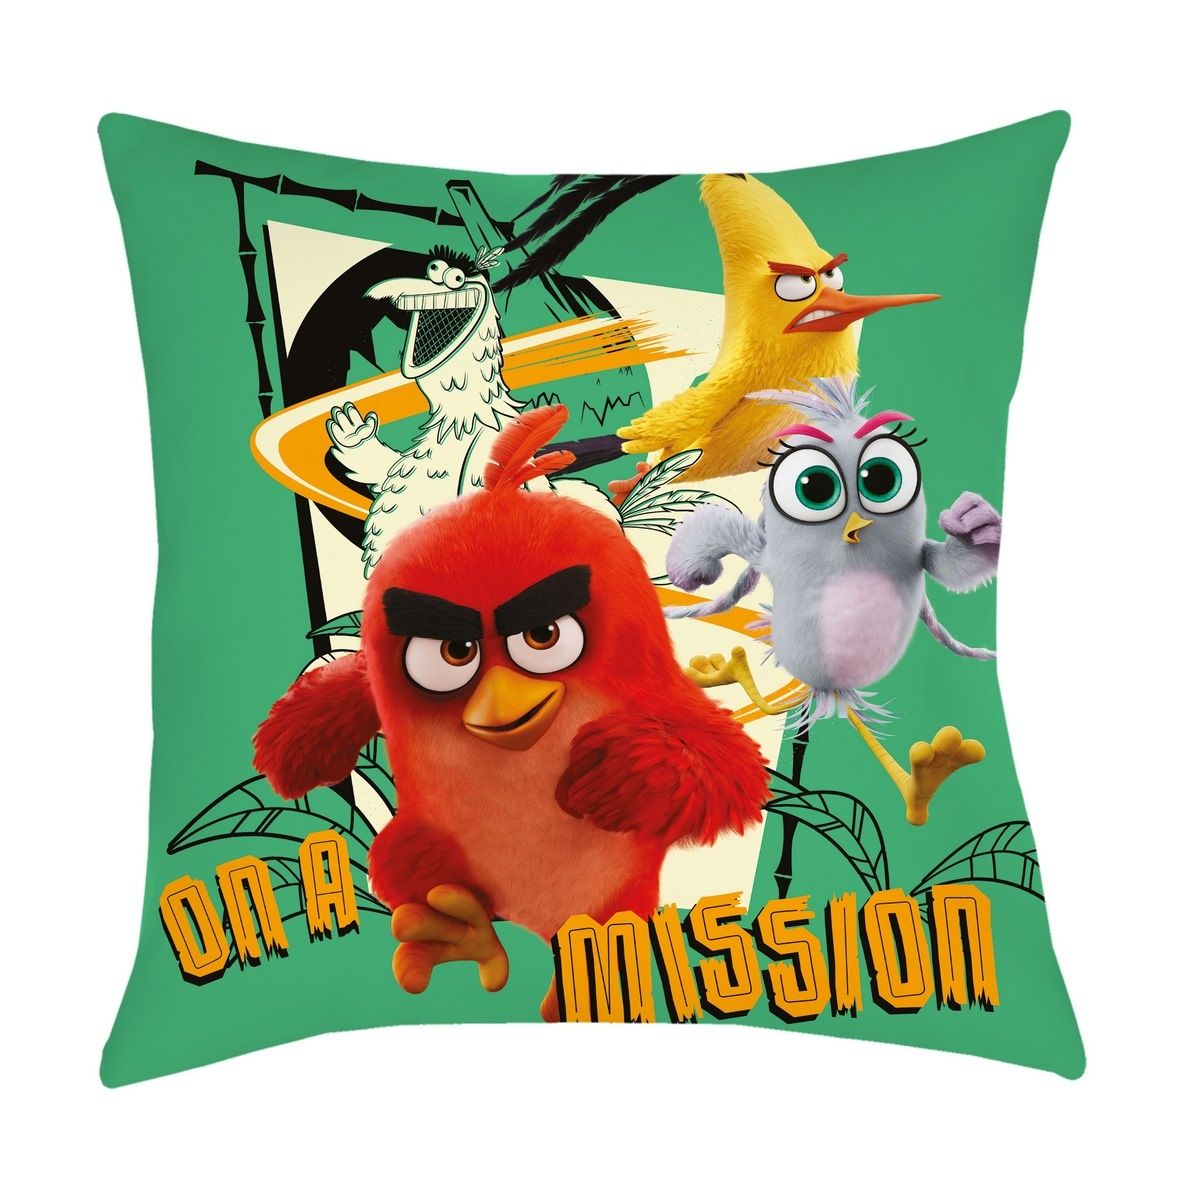 Halantex Polštářek Angry Birds Movie 2 On a mission, 40x 40 cm - 4home.cz